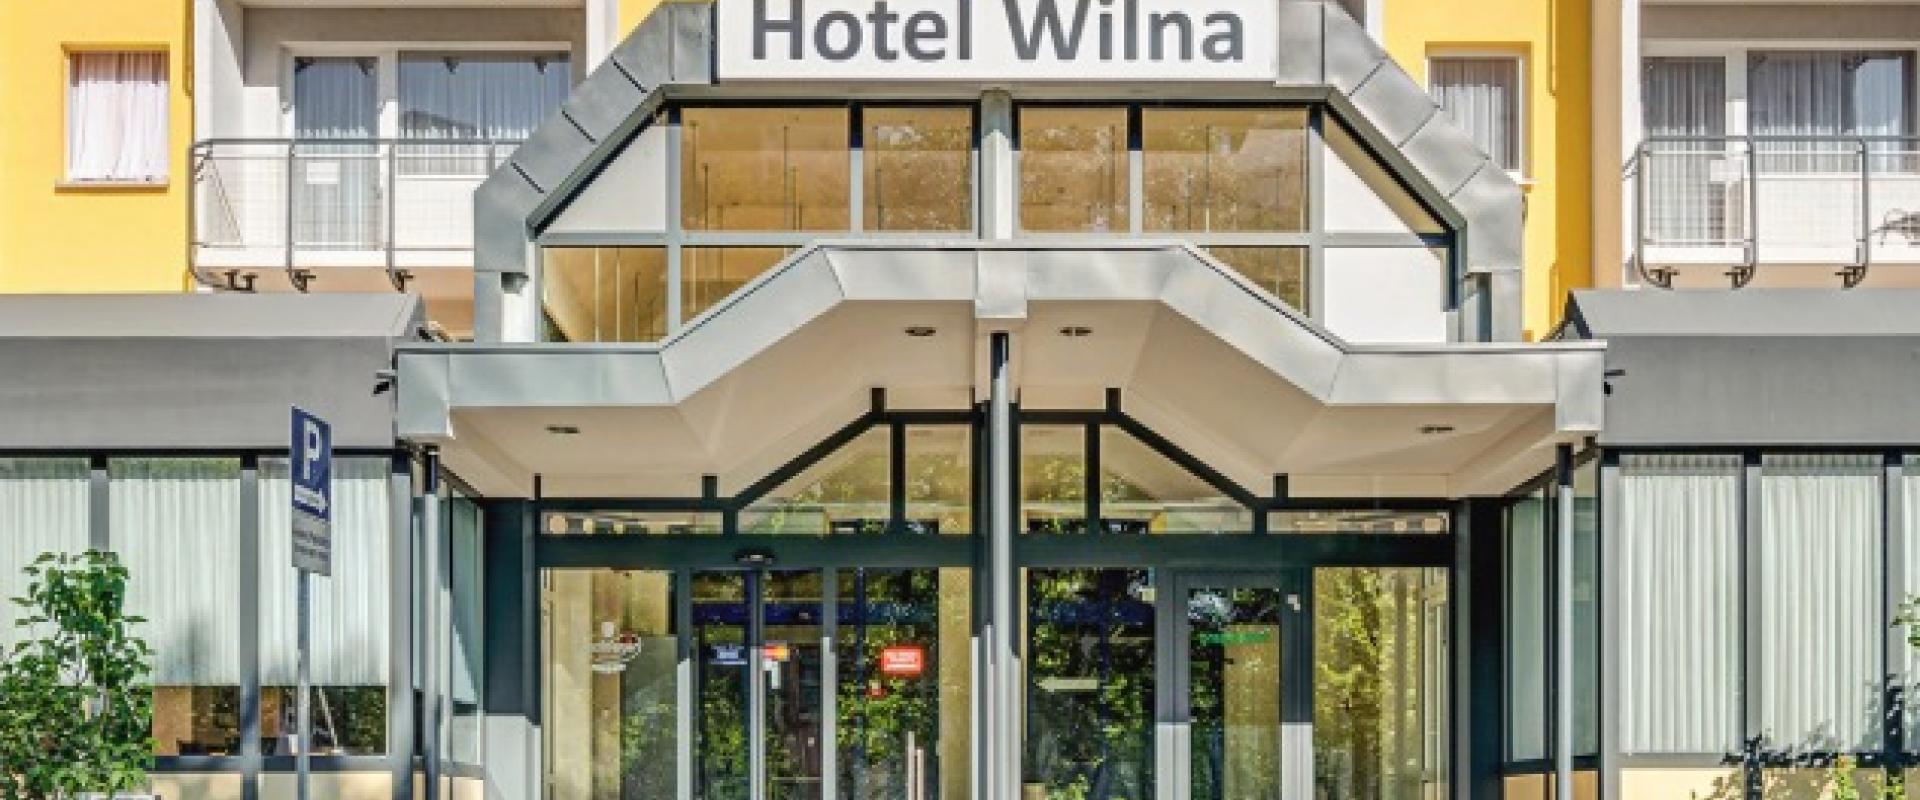 30670 eBike Hotel Wilna Thüringen Hausansicht.jpg